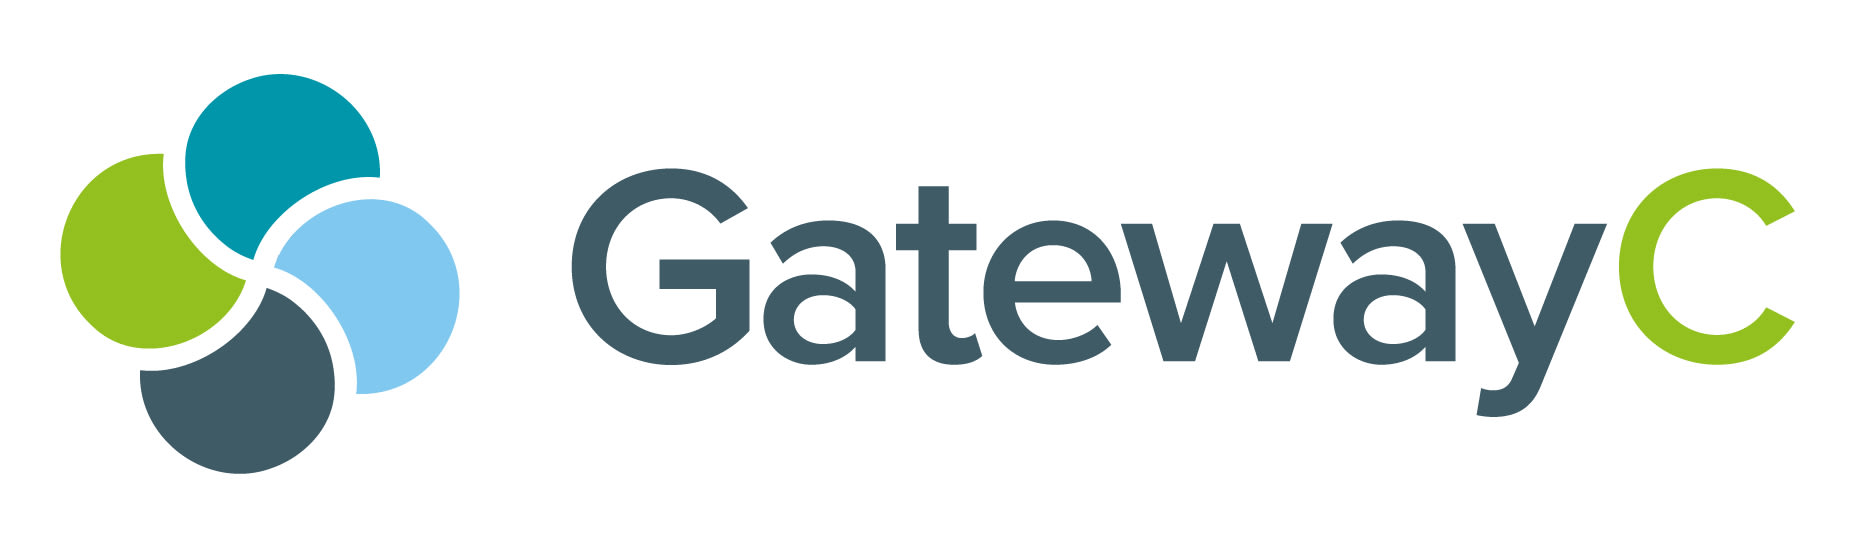 GatewayC